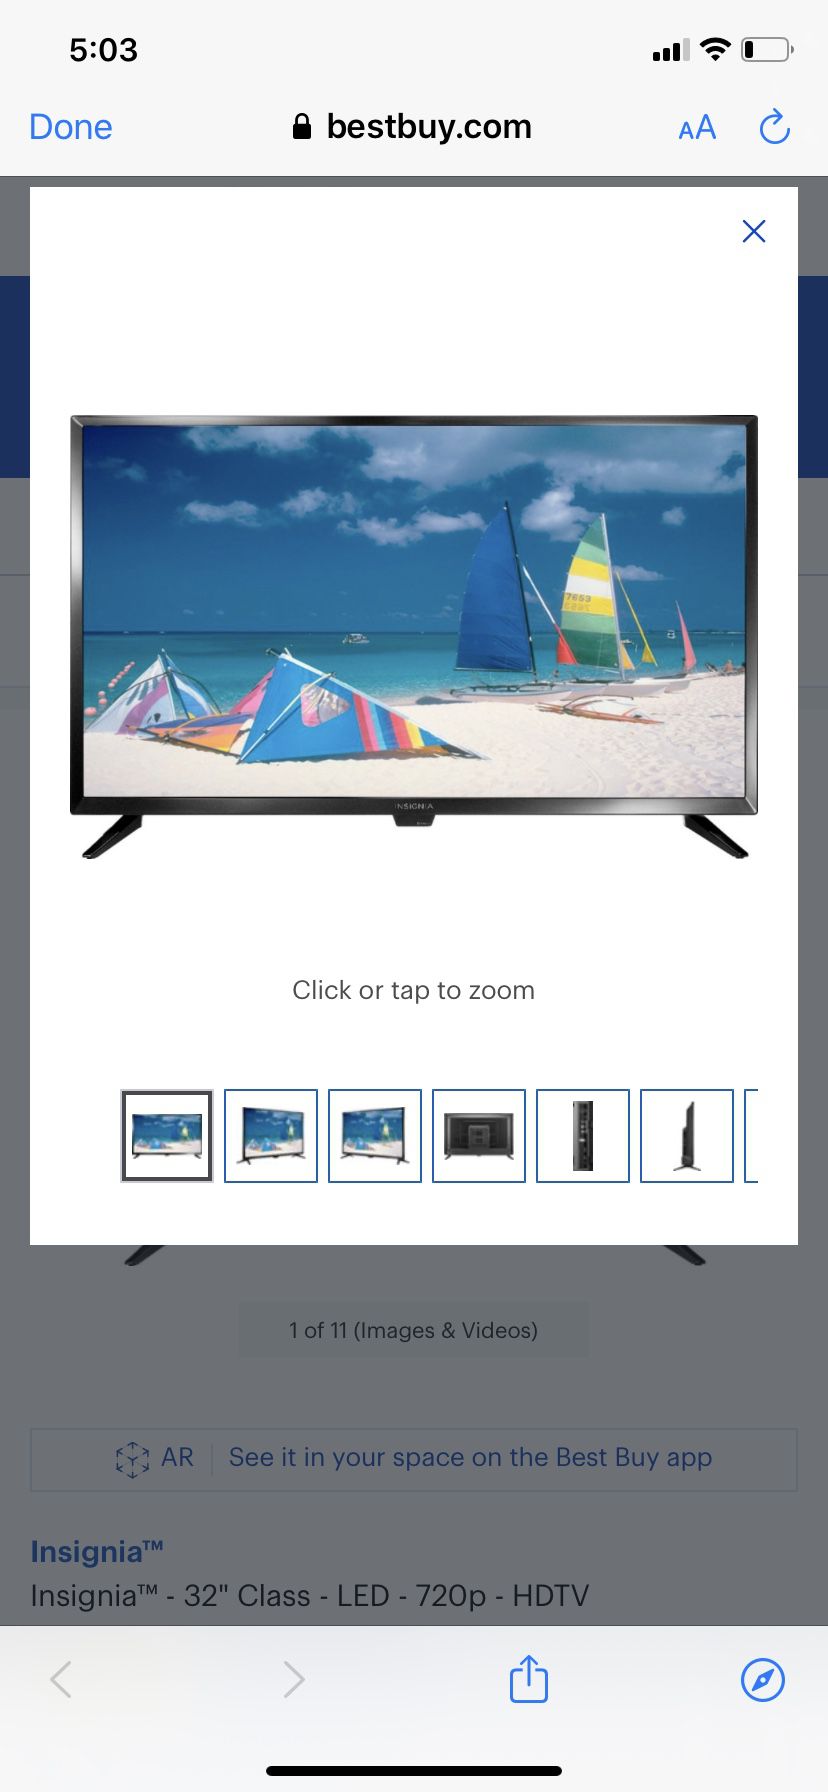 Insignia™ - 32" Class - LED - 720p - HDTV